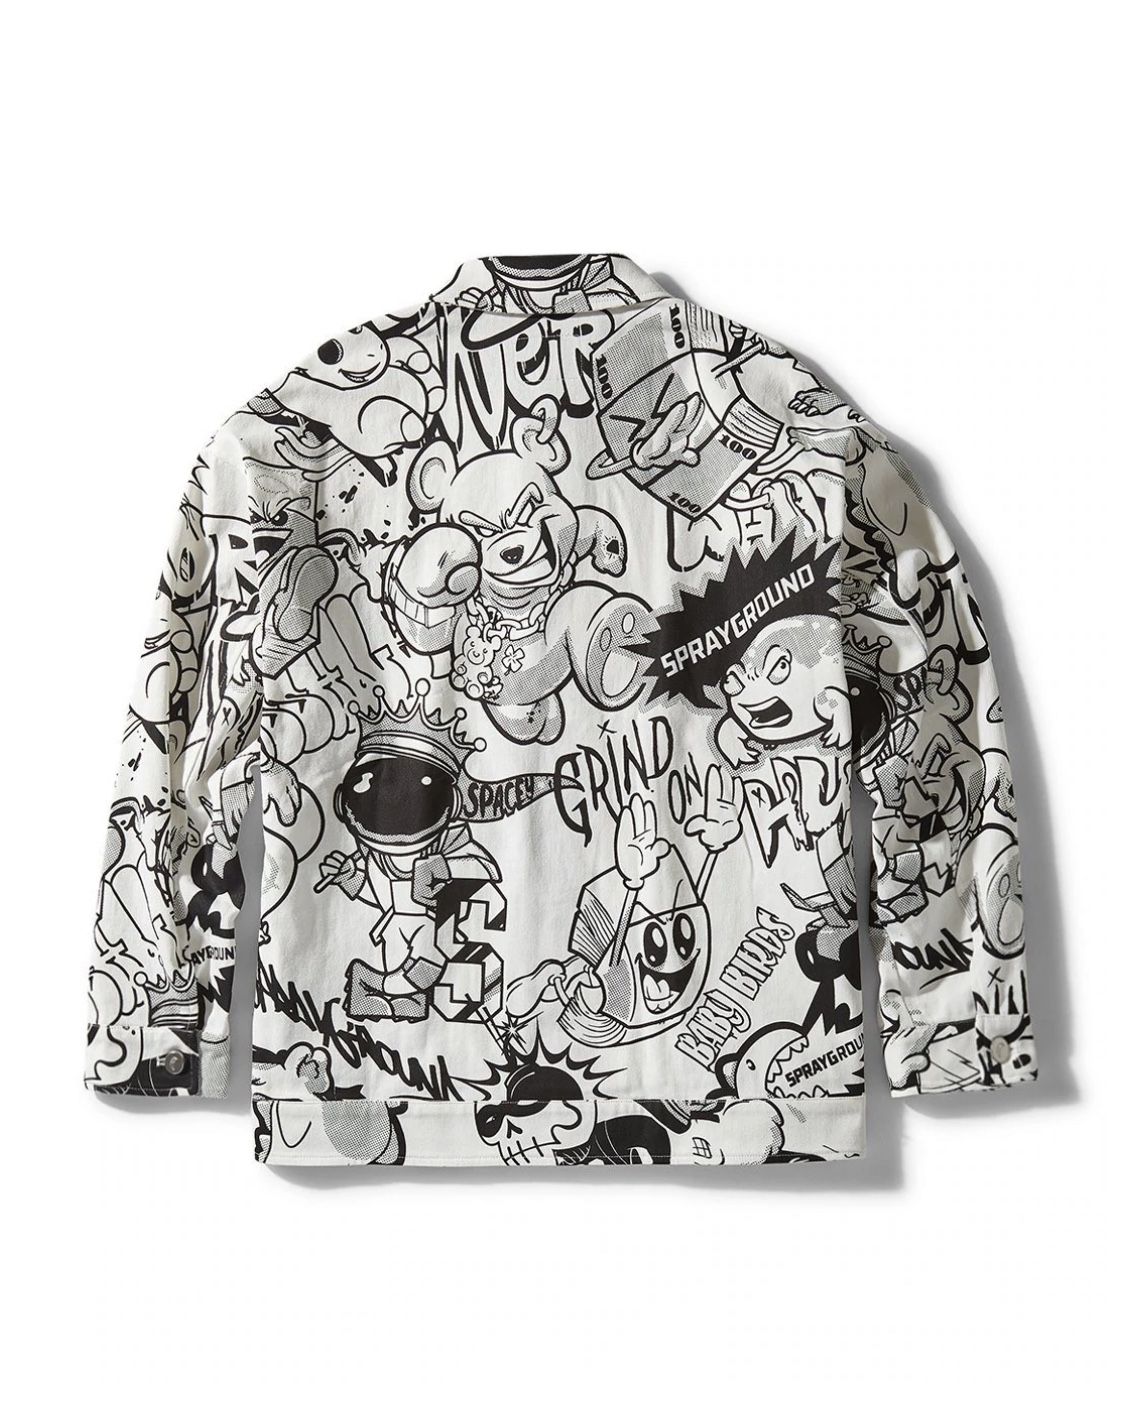 Sprayground 🔥Chaos Button Up Jacket Windbreaker Mens X-Large or Large Graffiti Cartoon Black White 